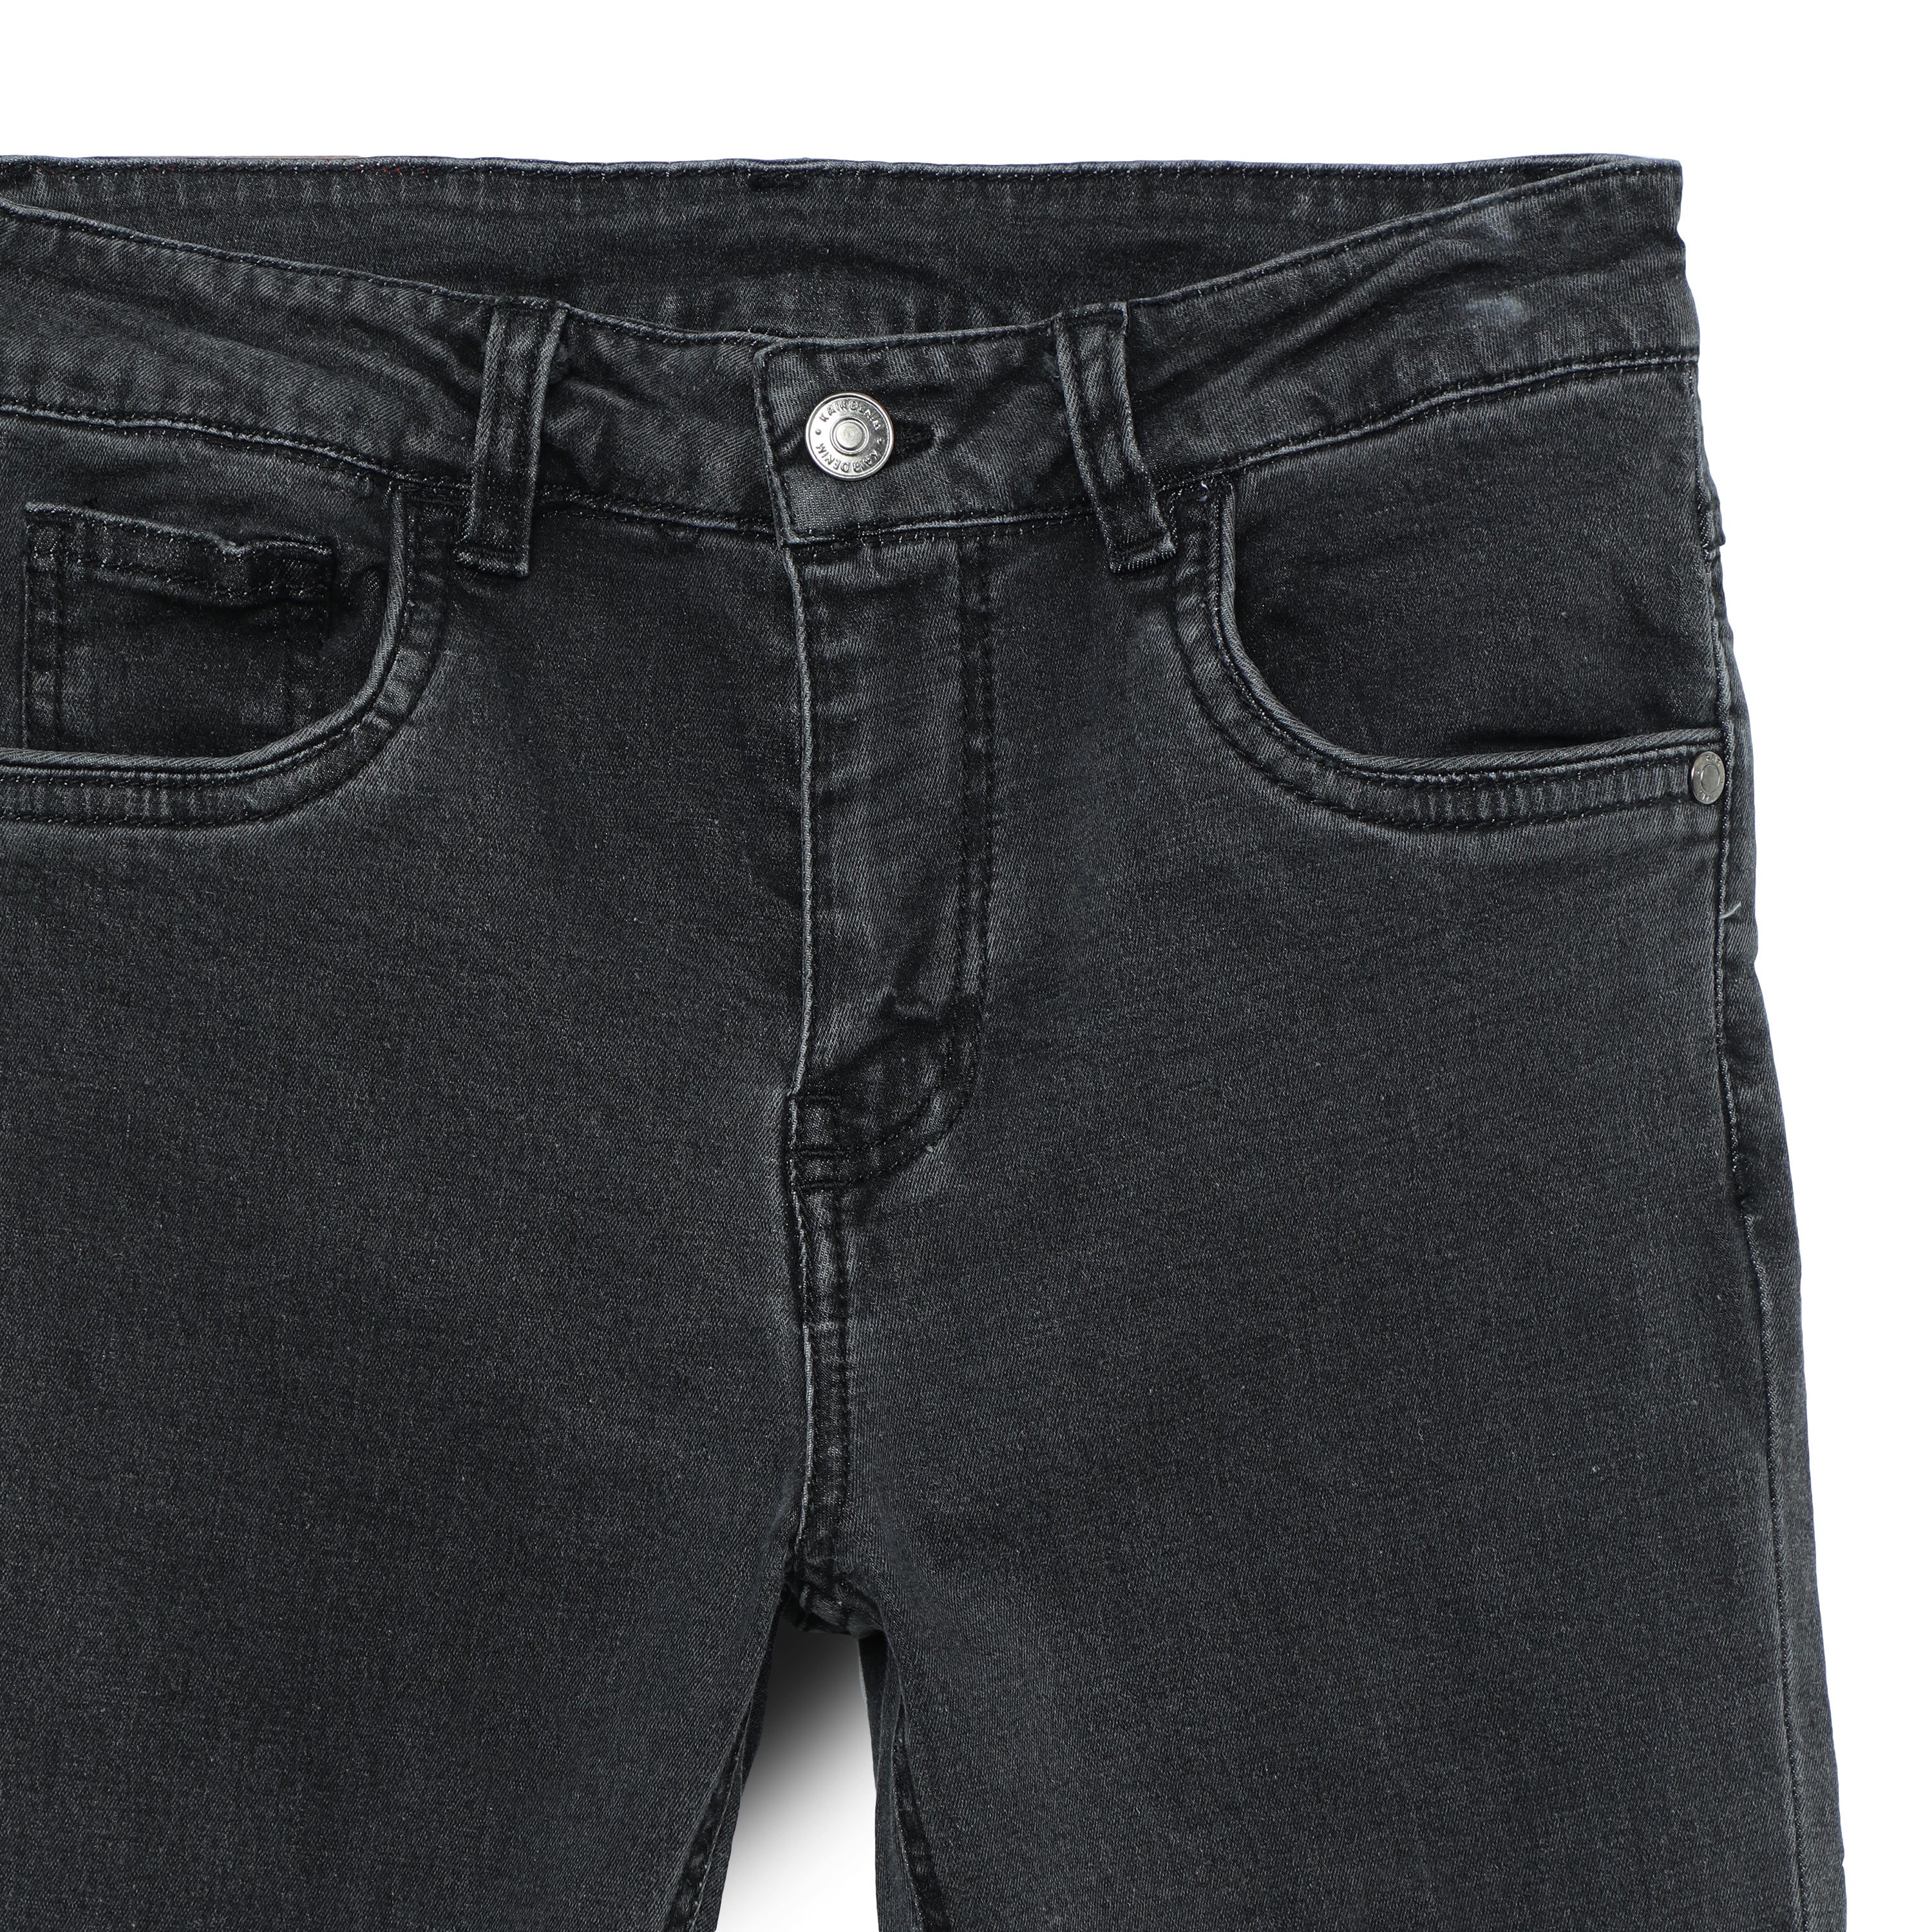 Women's Jeans Jeggings Five Pocket Stretch Denim Pants (Black, Medium) -  Walmart.com